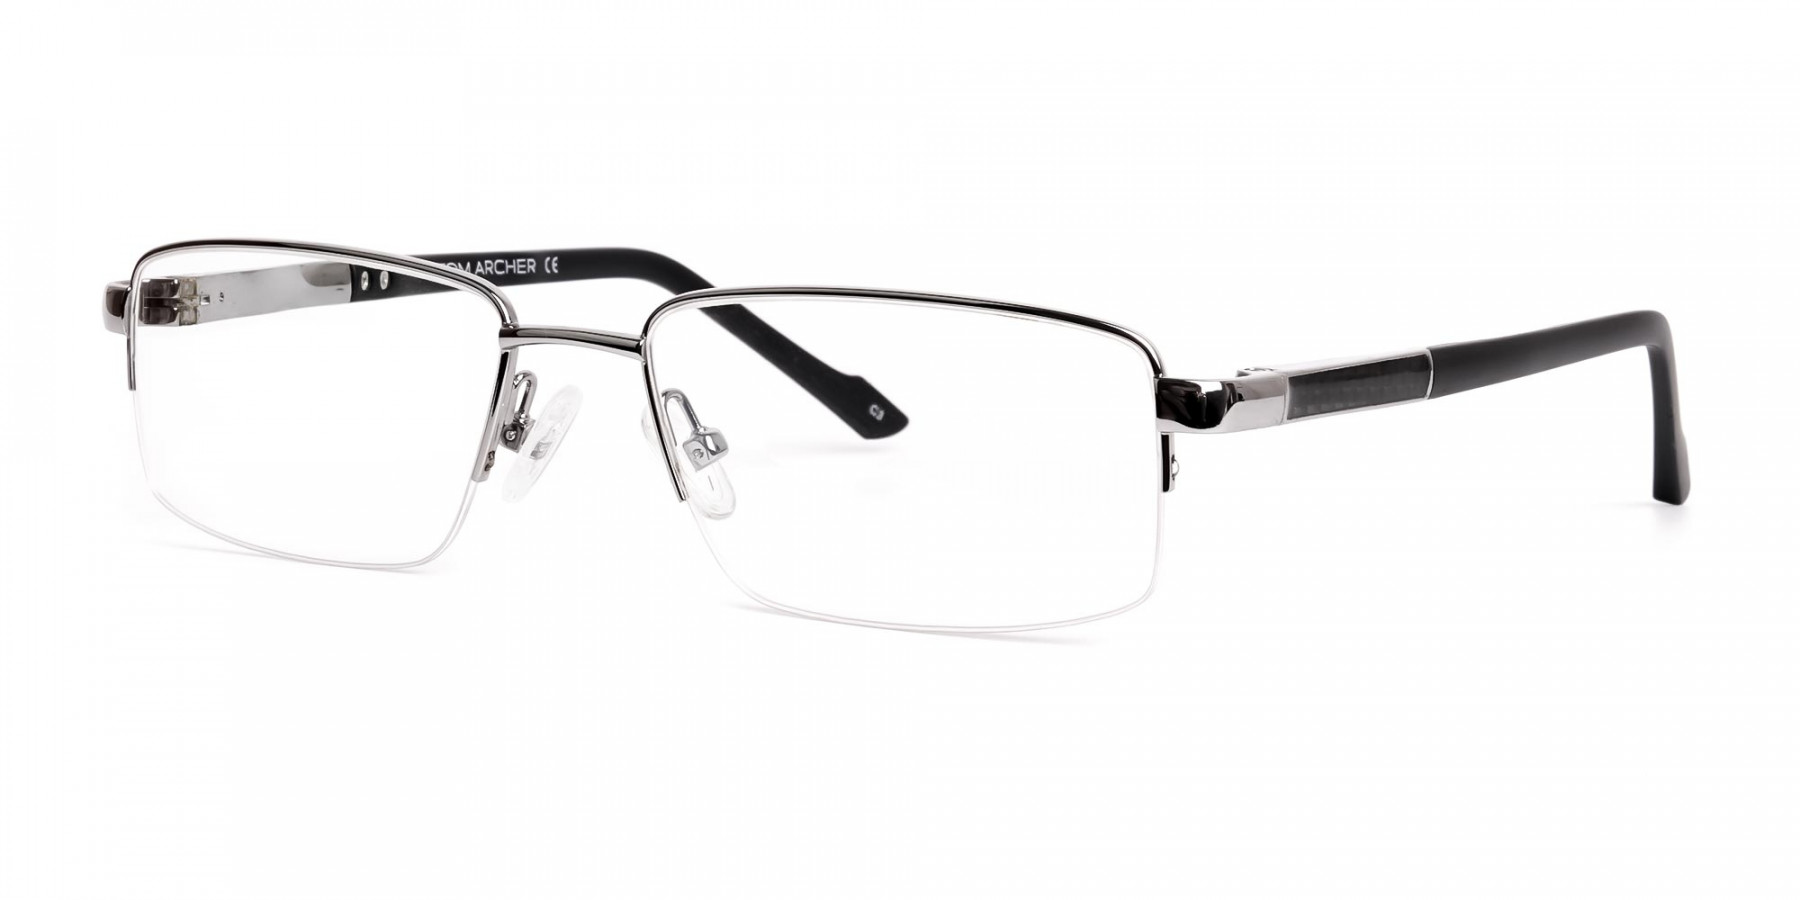 silver-and-black-half-rim-rectangular-glasses-frames -1